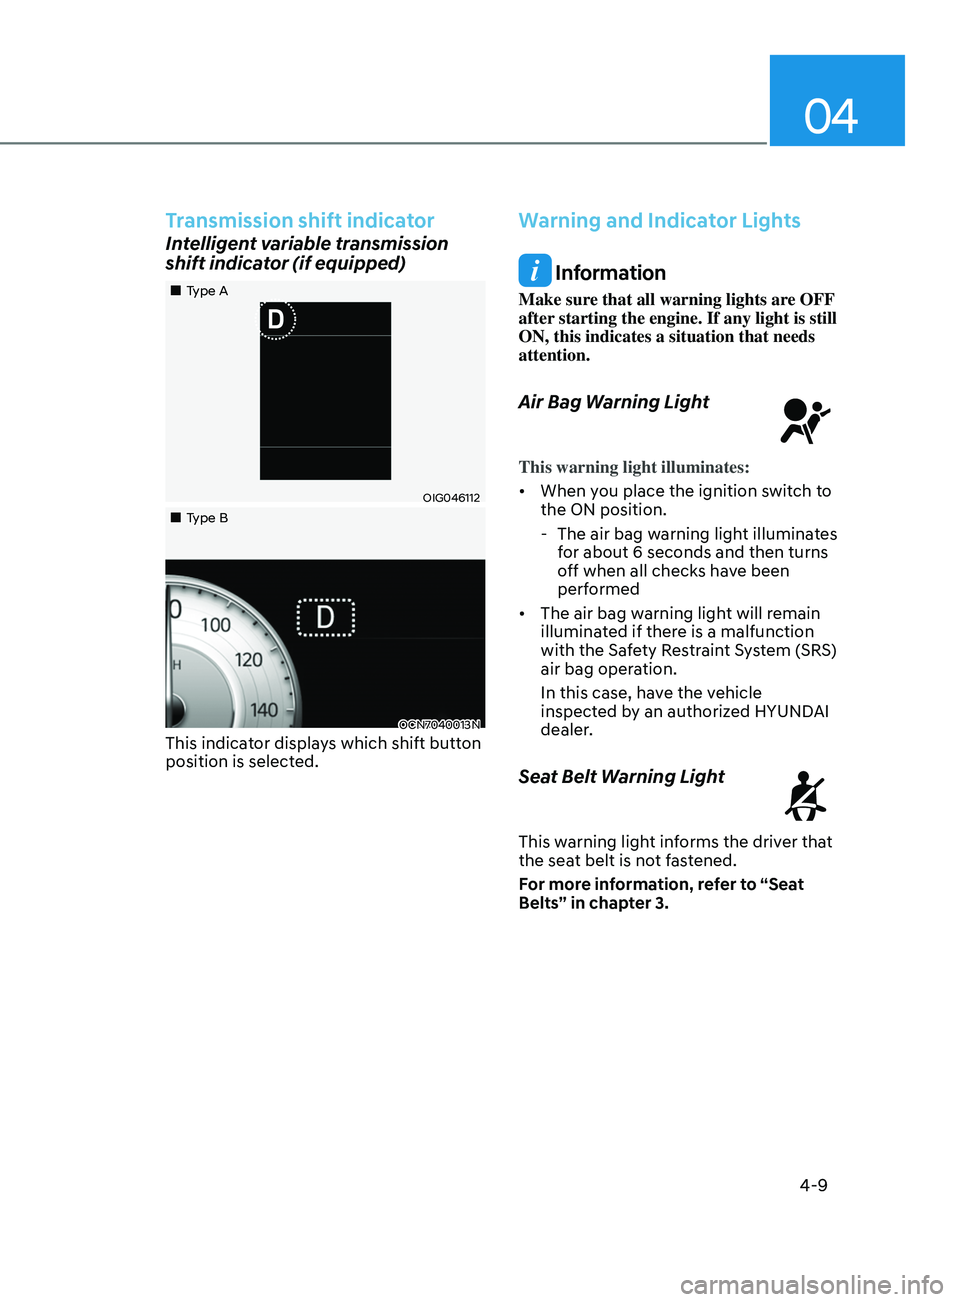 HYUNDAI ELANTRA 2021 Owners Manual 04
4-9
Transmission shift indicator
Intelligent variable transmission 
shift indicator (if equipped)
OIG046112
OCN7040013N
„„Type A
„
„Type B
This indicator displays which shift bu